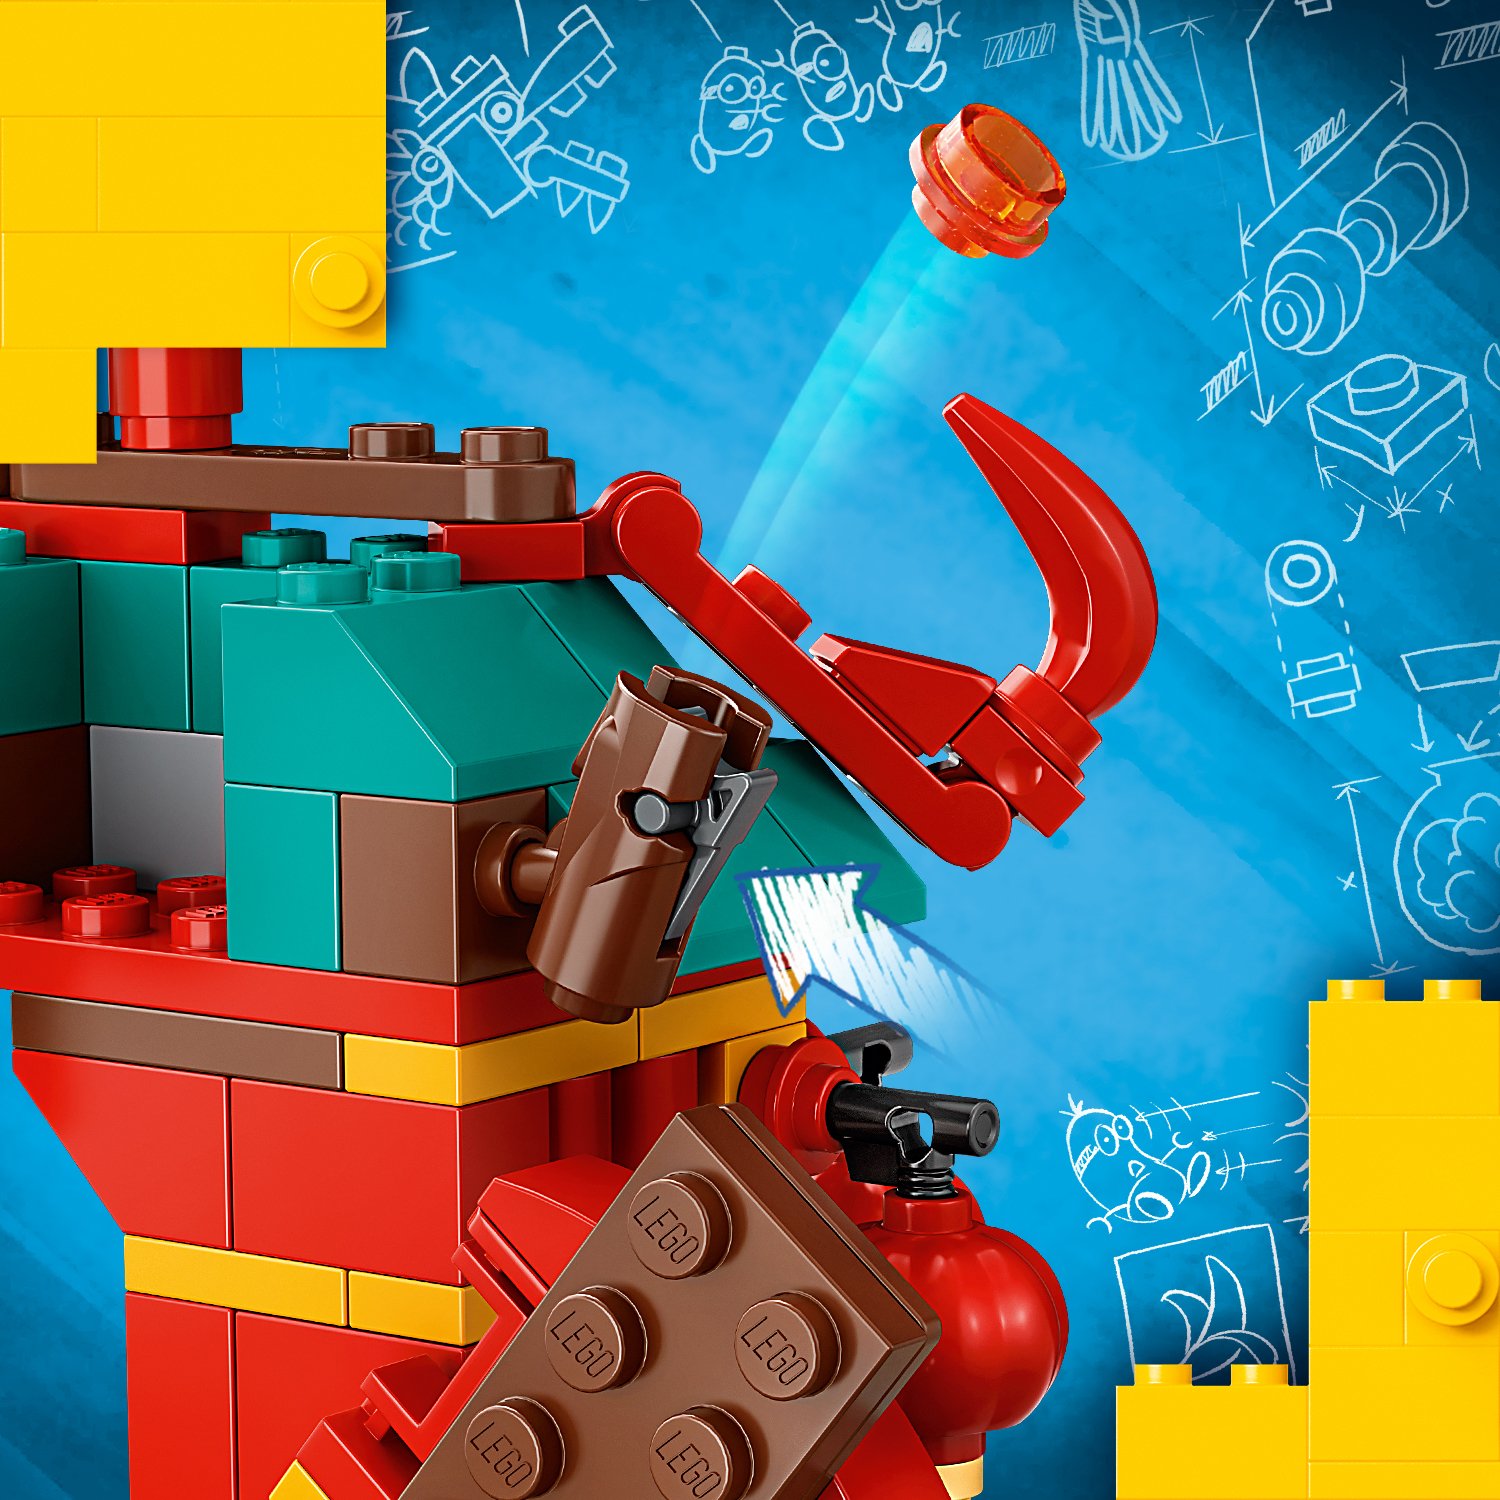 Конструктор Lego Minions 75550 Миньоны: бойцы кунг-фу